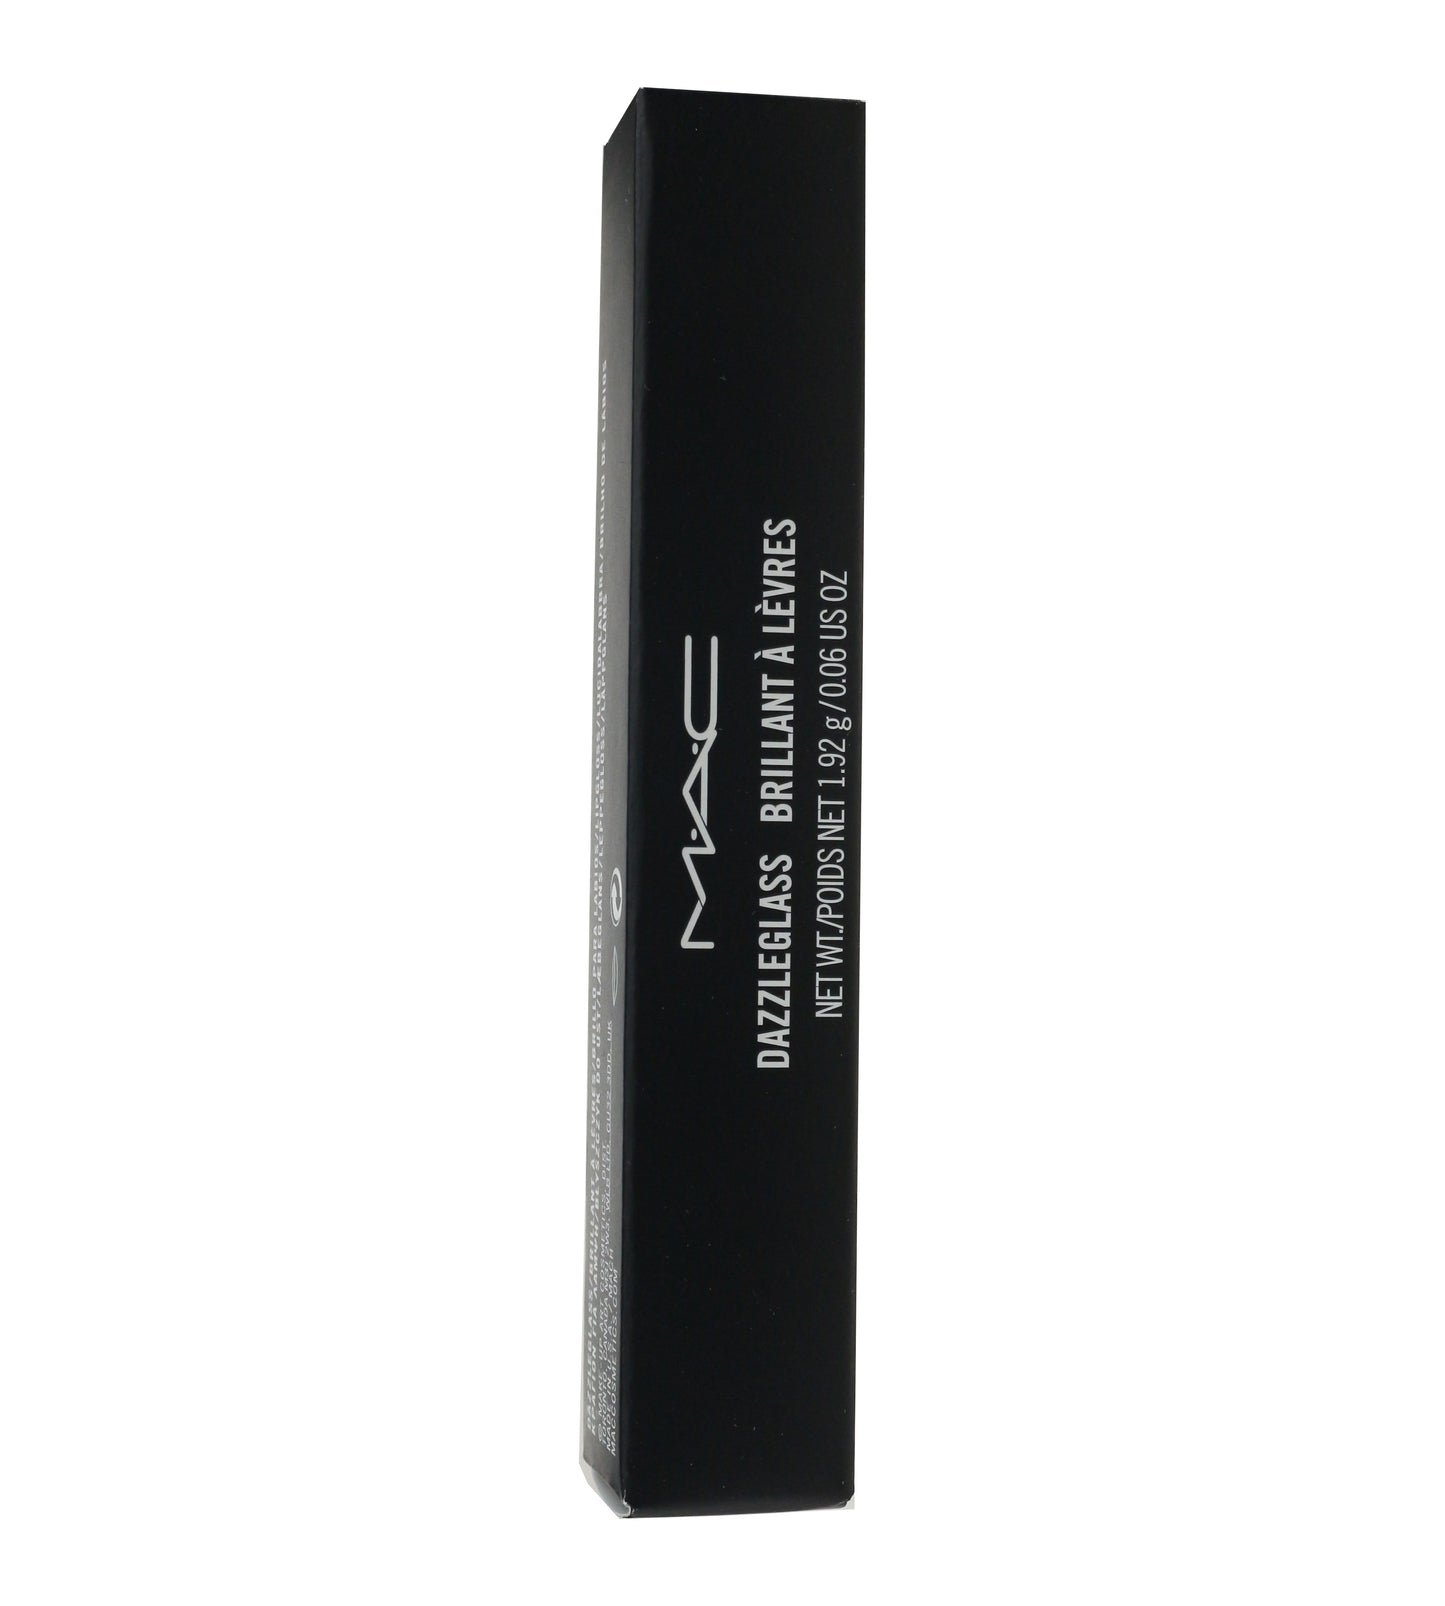 Mac Dazzleglass Lip Gloss 0.06oz/1.92g New In Box [Choose Your Shade]